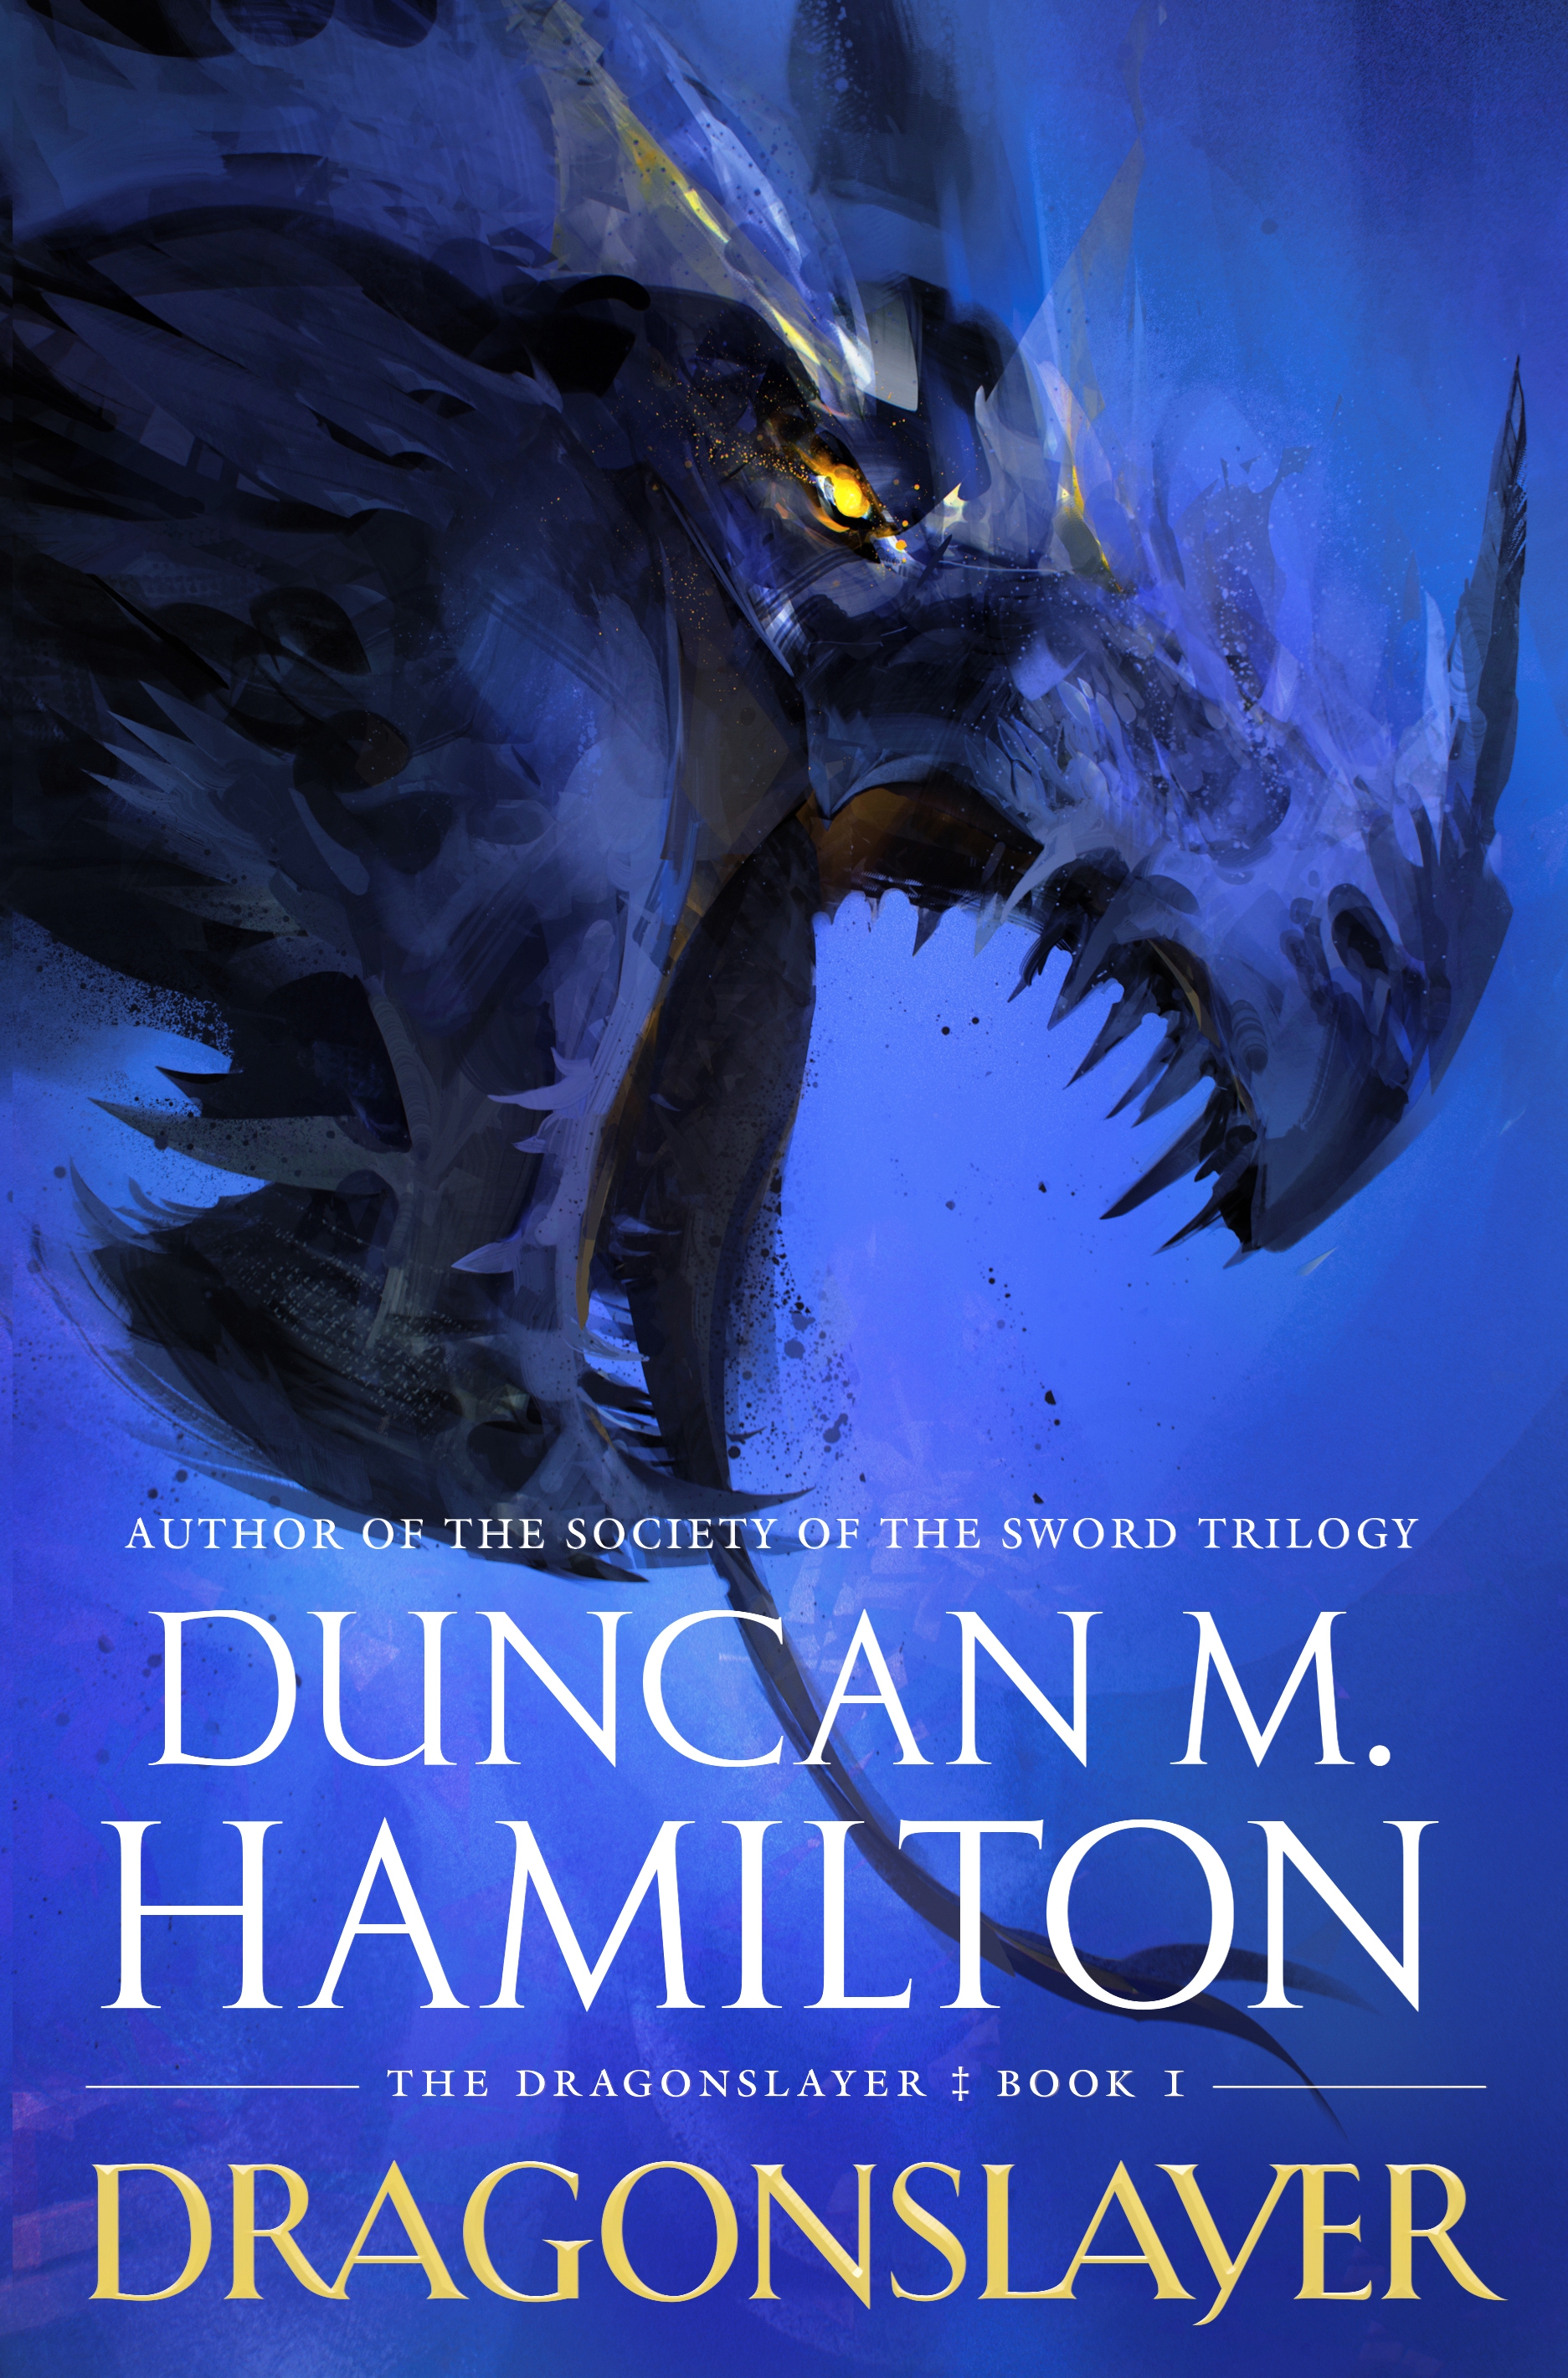 Dragonslayer by Duncan M. Hamilton